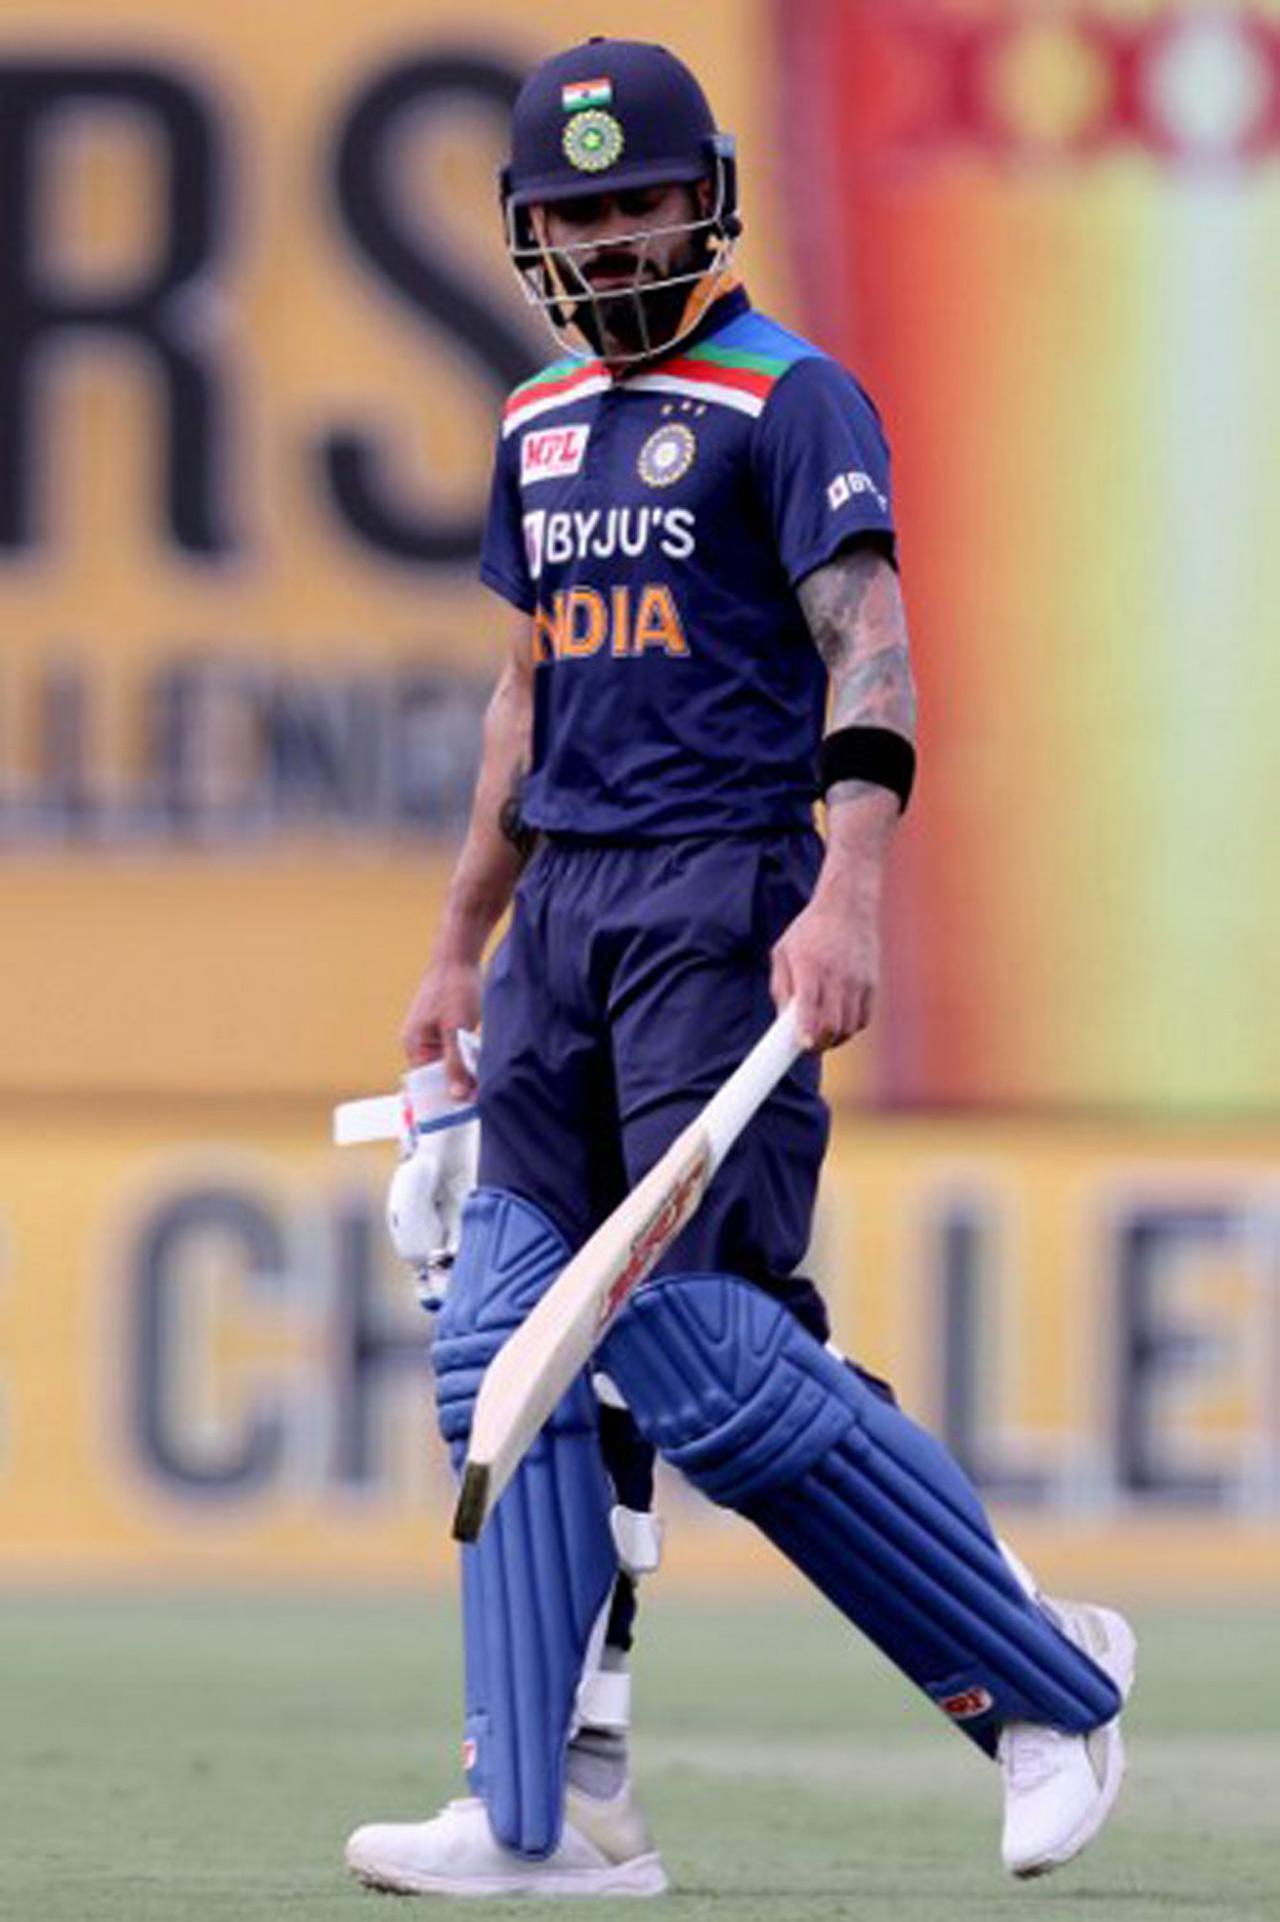 During the third ODI between India and Australia on December 2, 2020, Virat Kohli scored his 12,000th run in ODI cricket. Kohli went on to break Sachin Tendulkar's record to become the fastest batsman to 12,000 runs in ODIs.